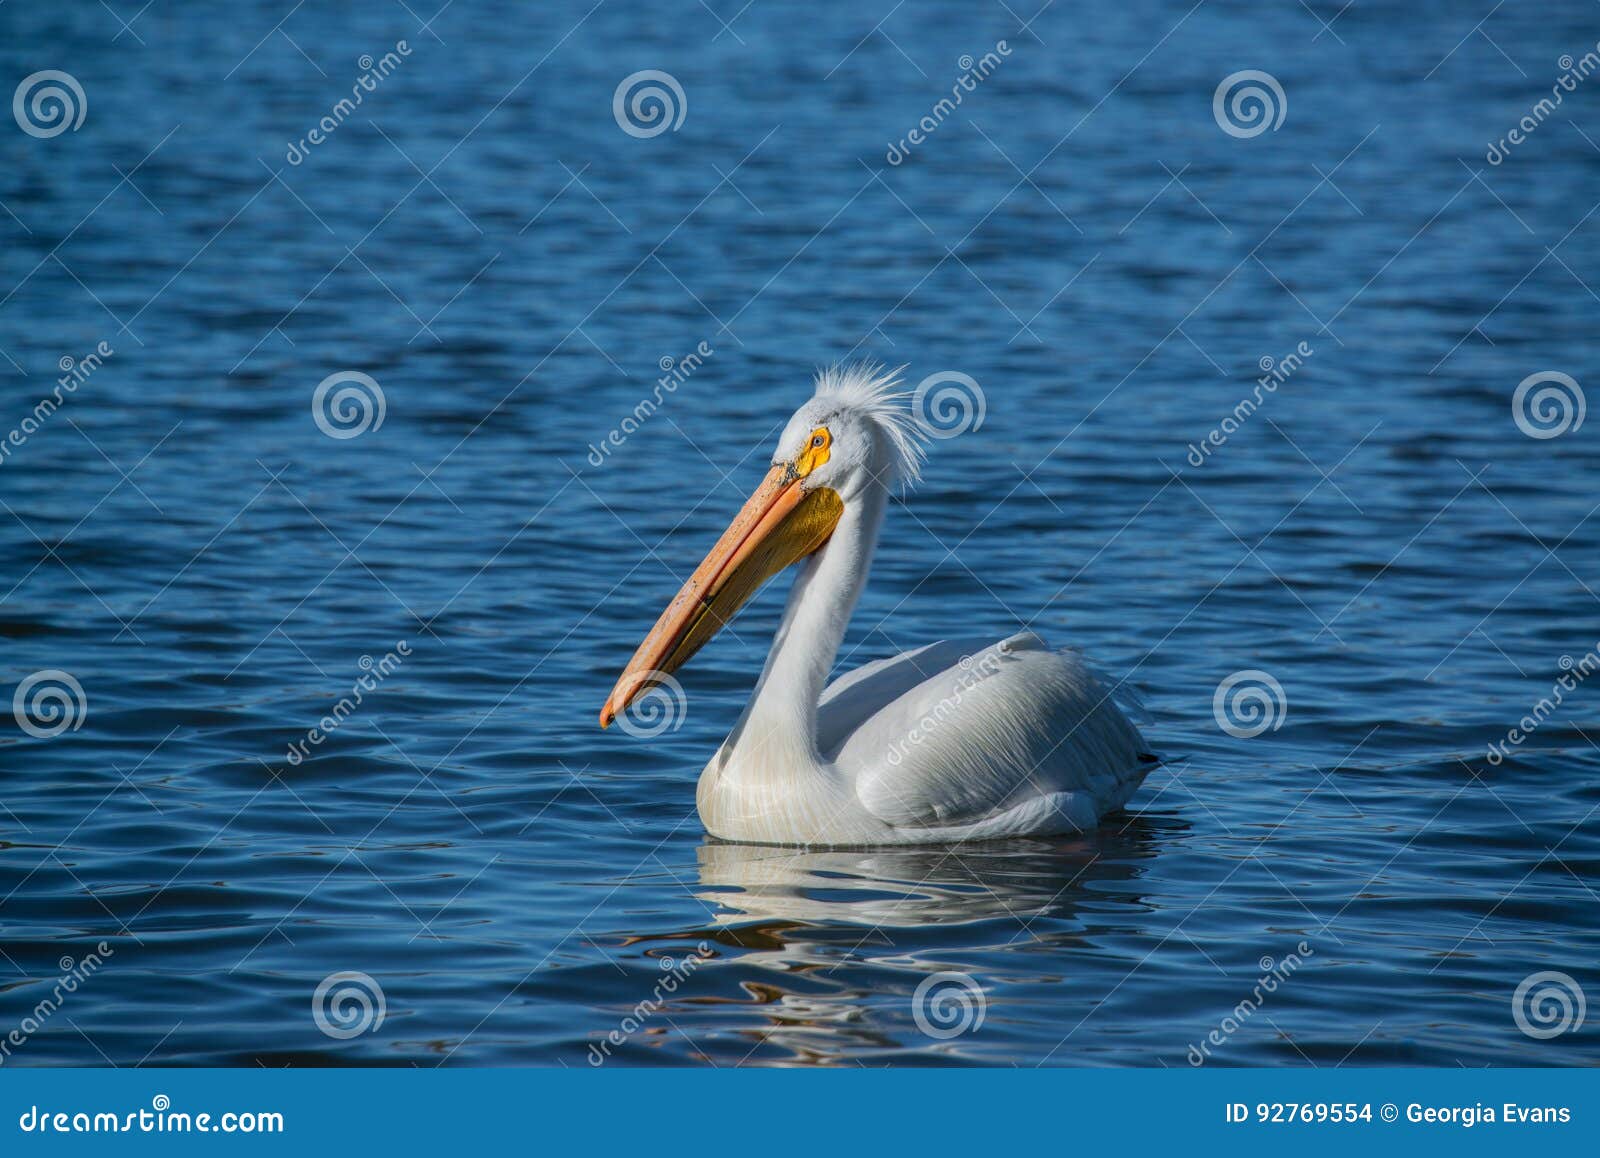 american white pelicans migrate through colorado every spring